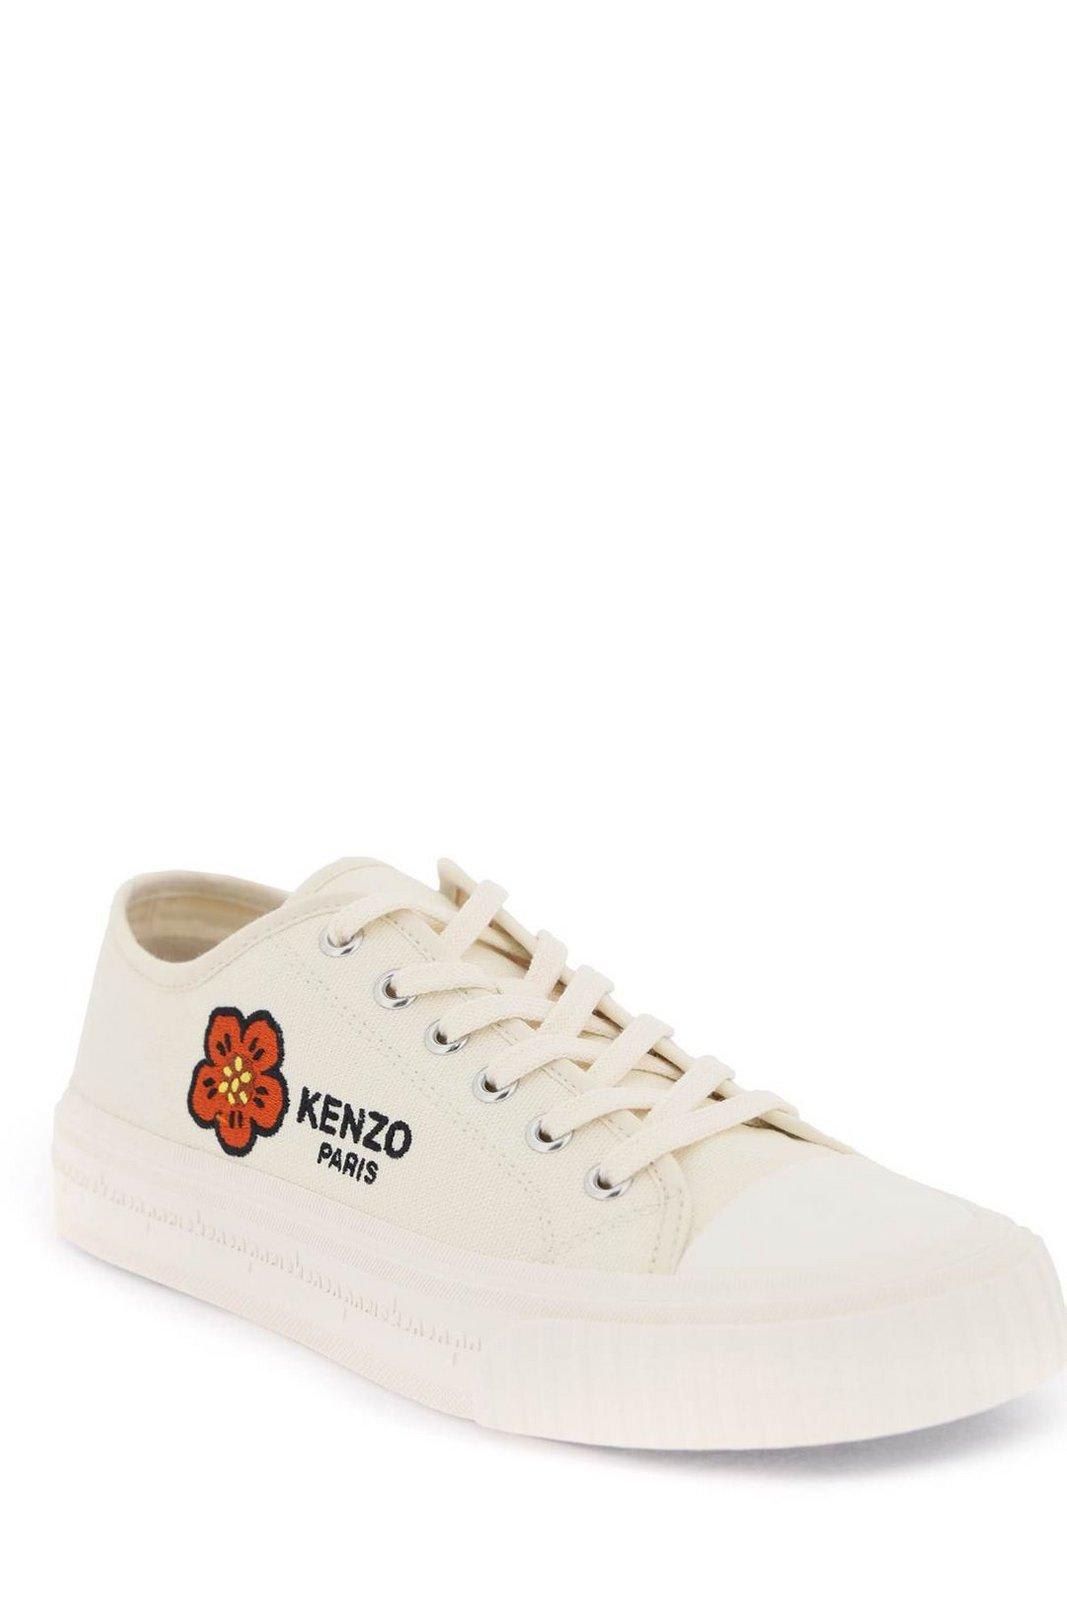 Shop Kenzo School Low-top Sneakers In White